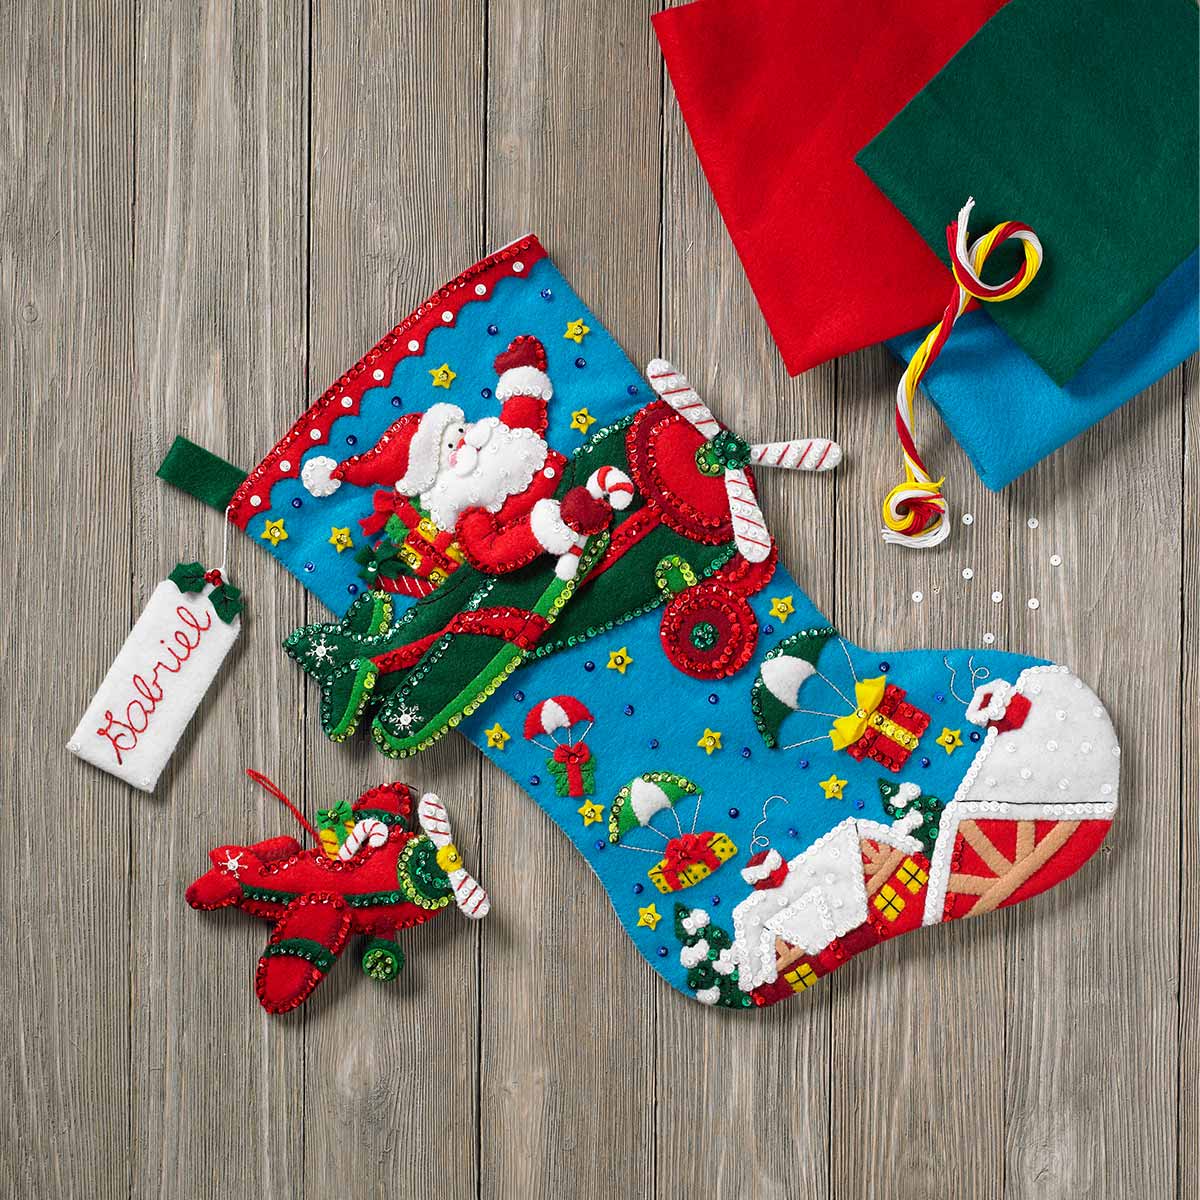 Bucilla ® Seasonal - Felt - Stocking Kits - Airplane Santa - 86863